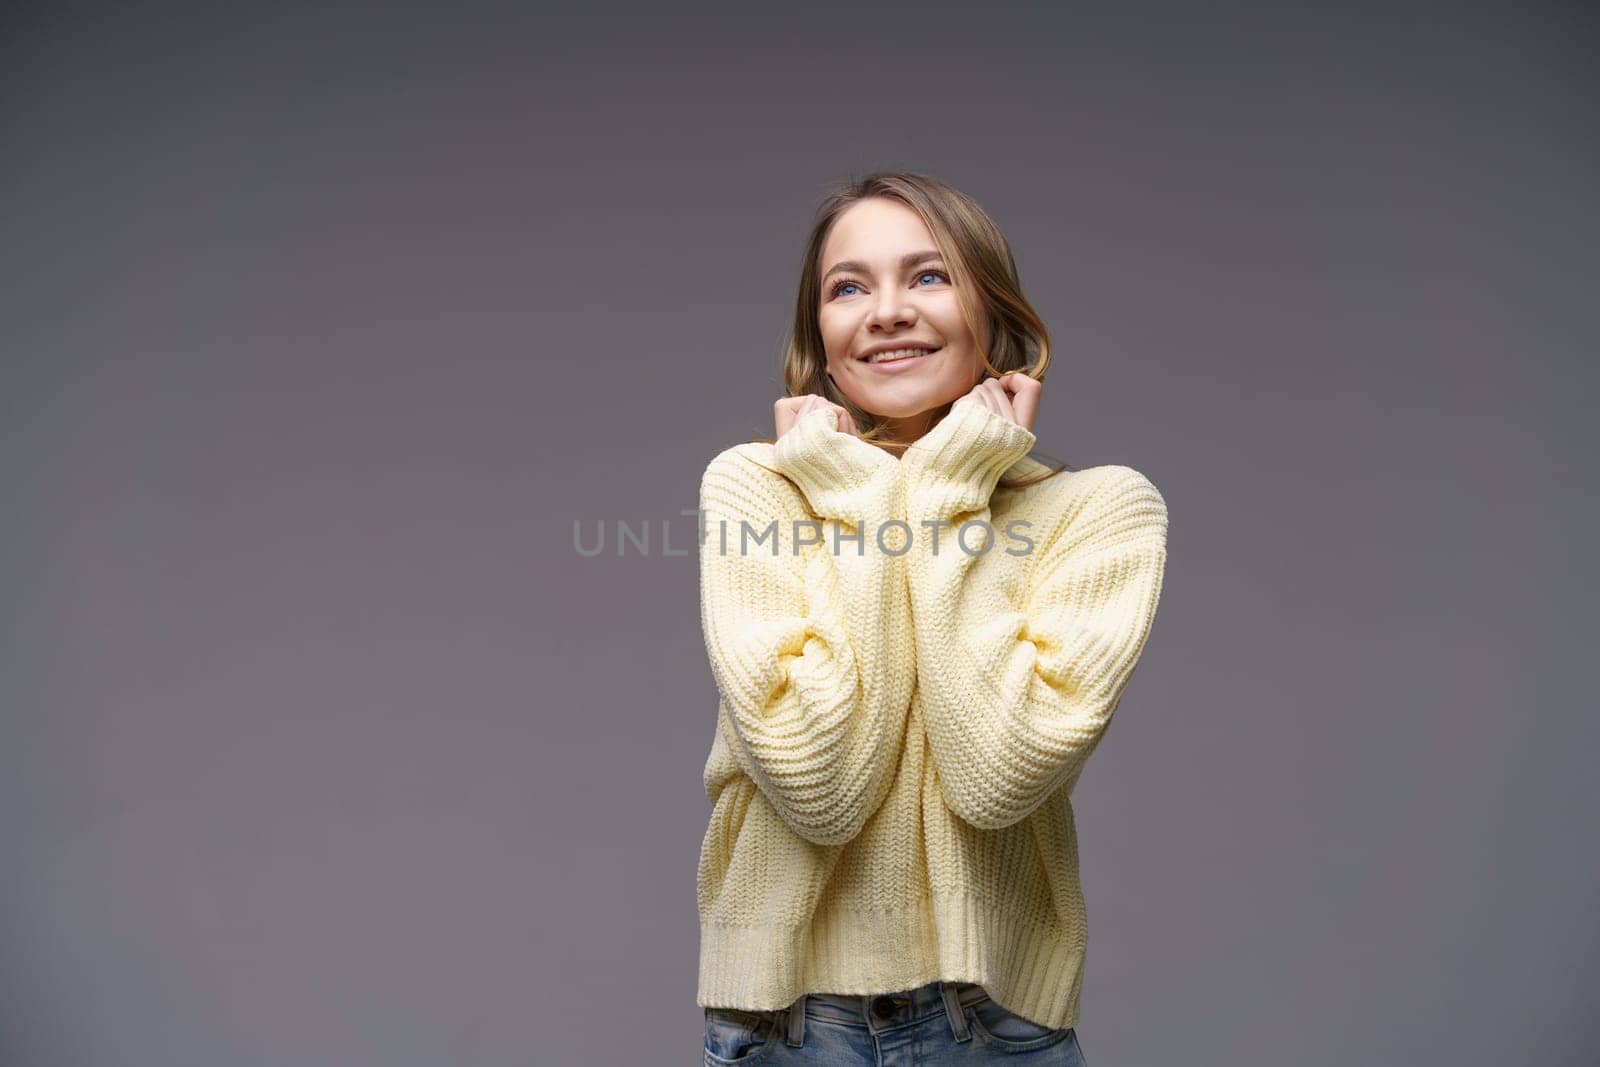 Female portrait beautiful girl in yellow sweater on gray background cute smiling by EkaterinaPereslavtseva